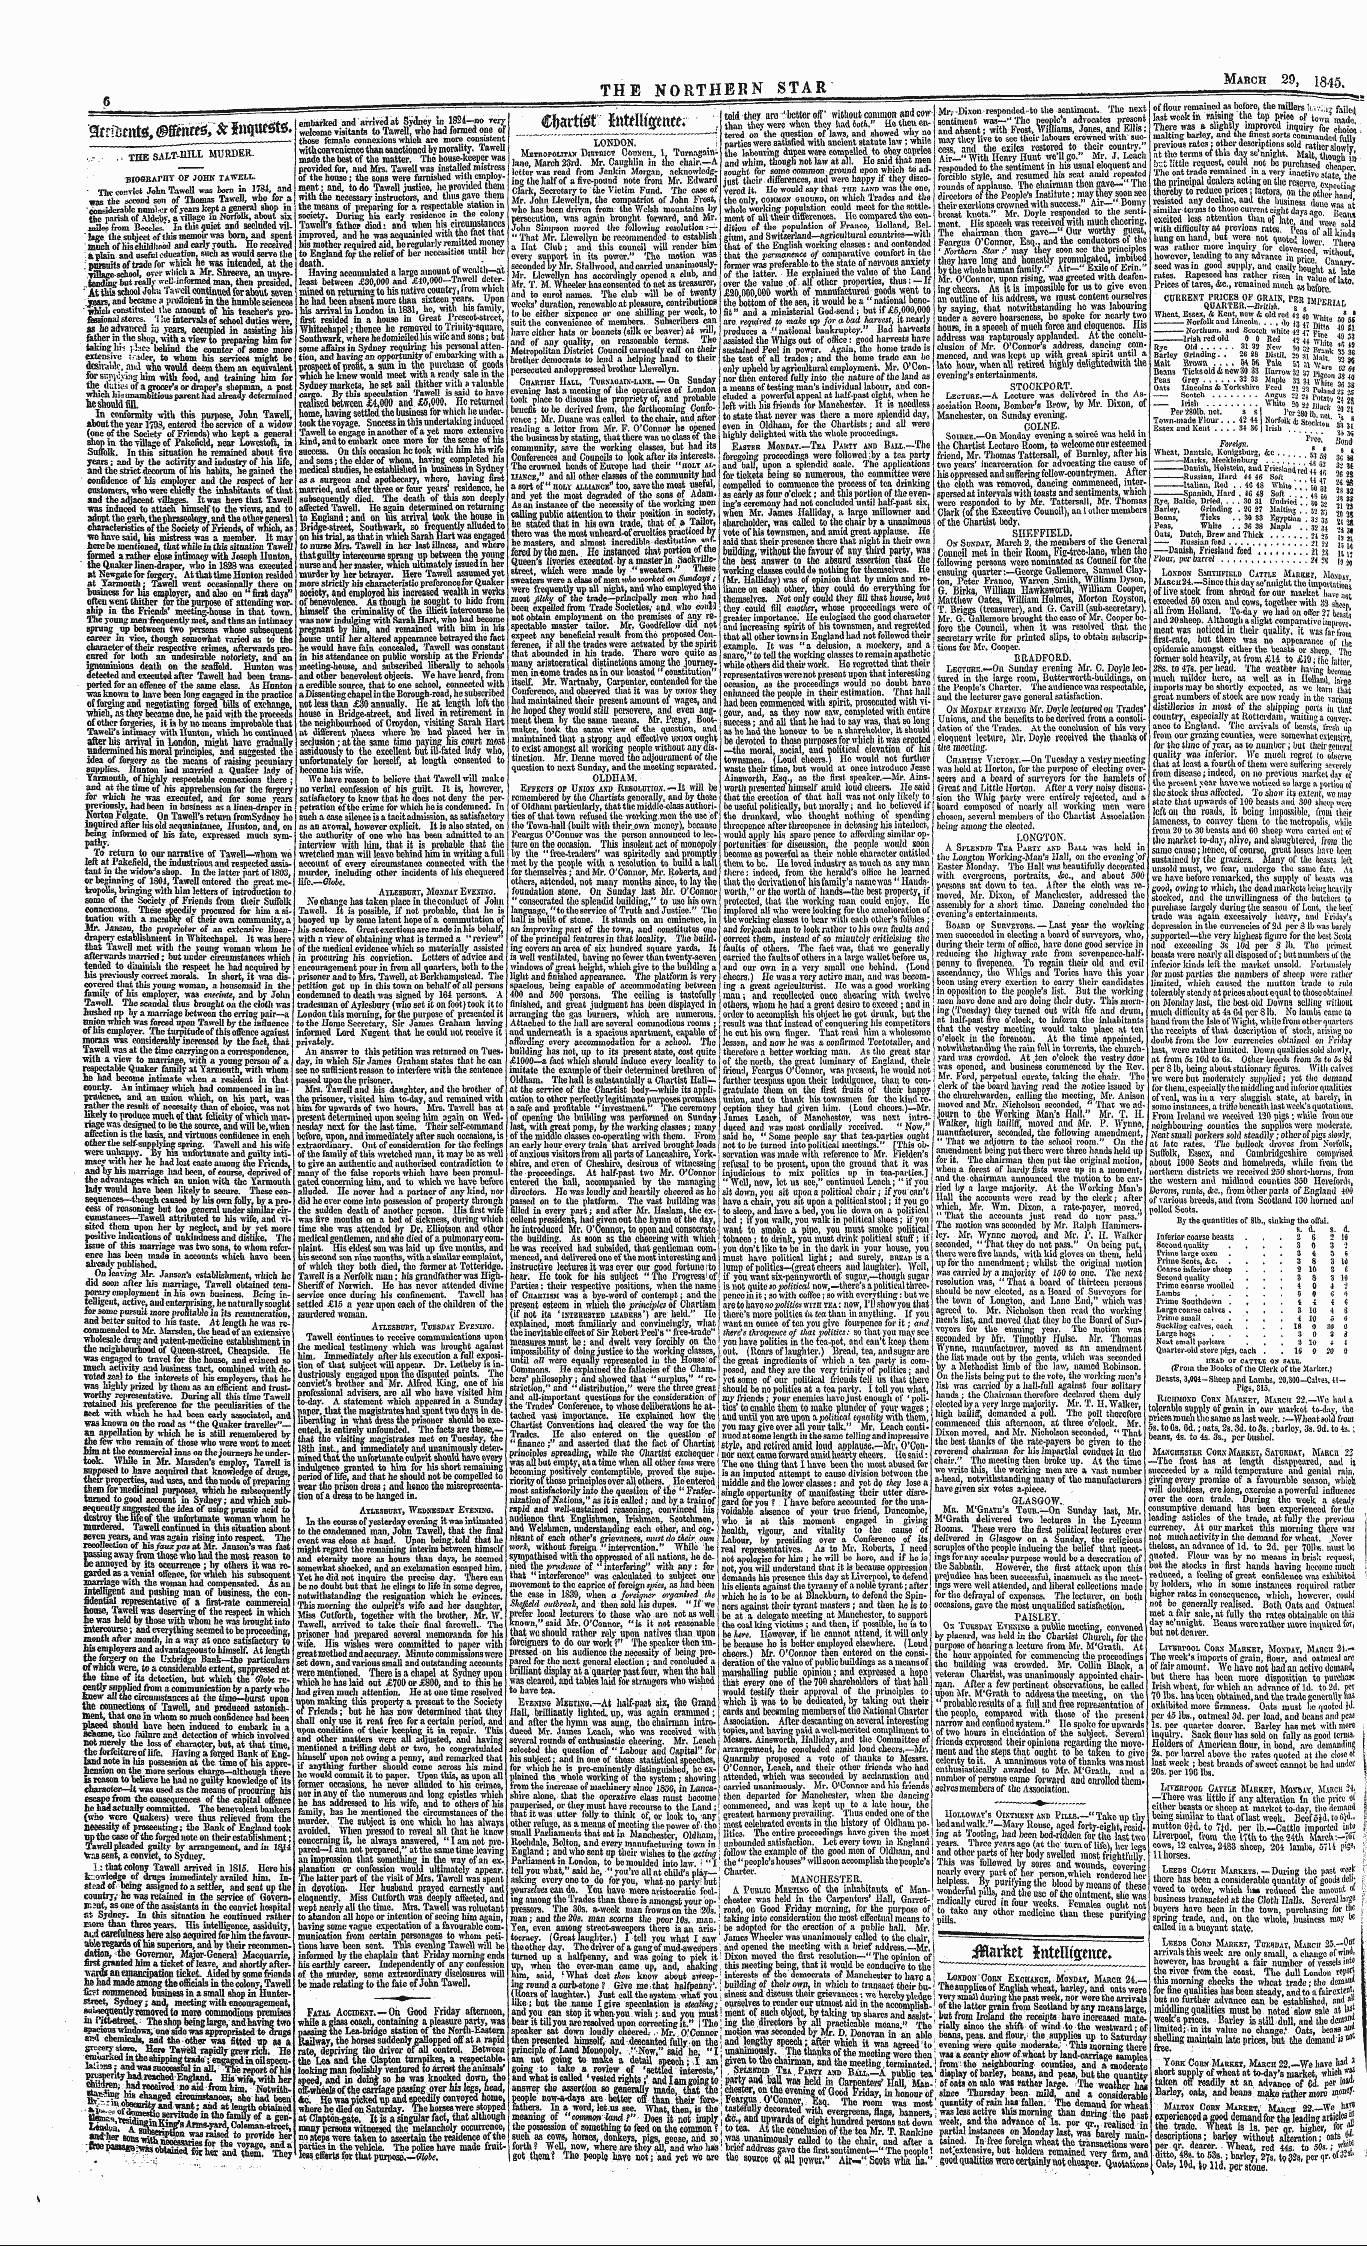 Northern Star (1837-1852): jS F Y, 2nd edition - Cftartt'c J^Flfjstttte;--